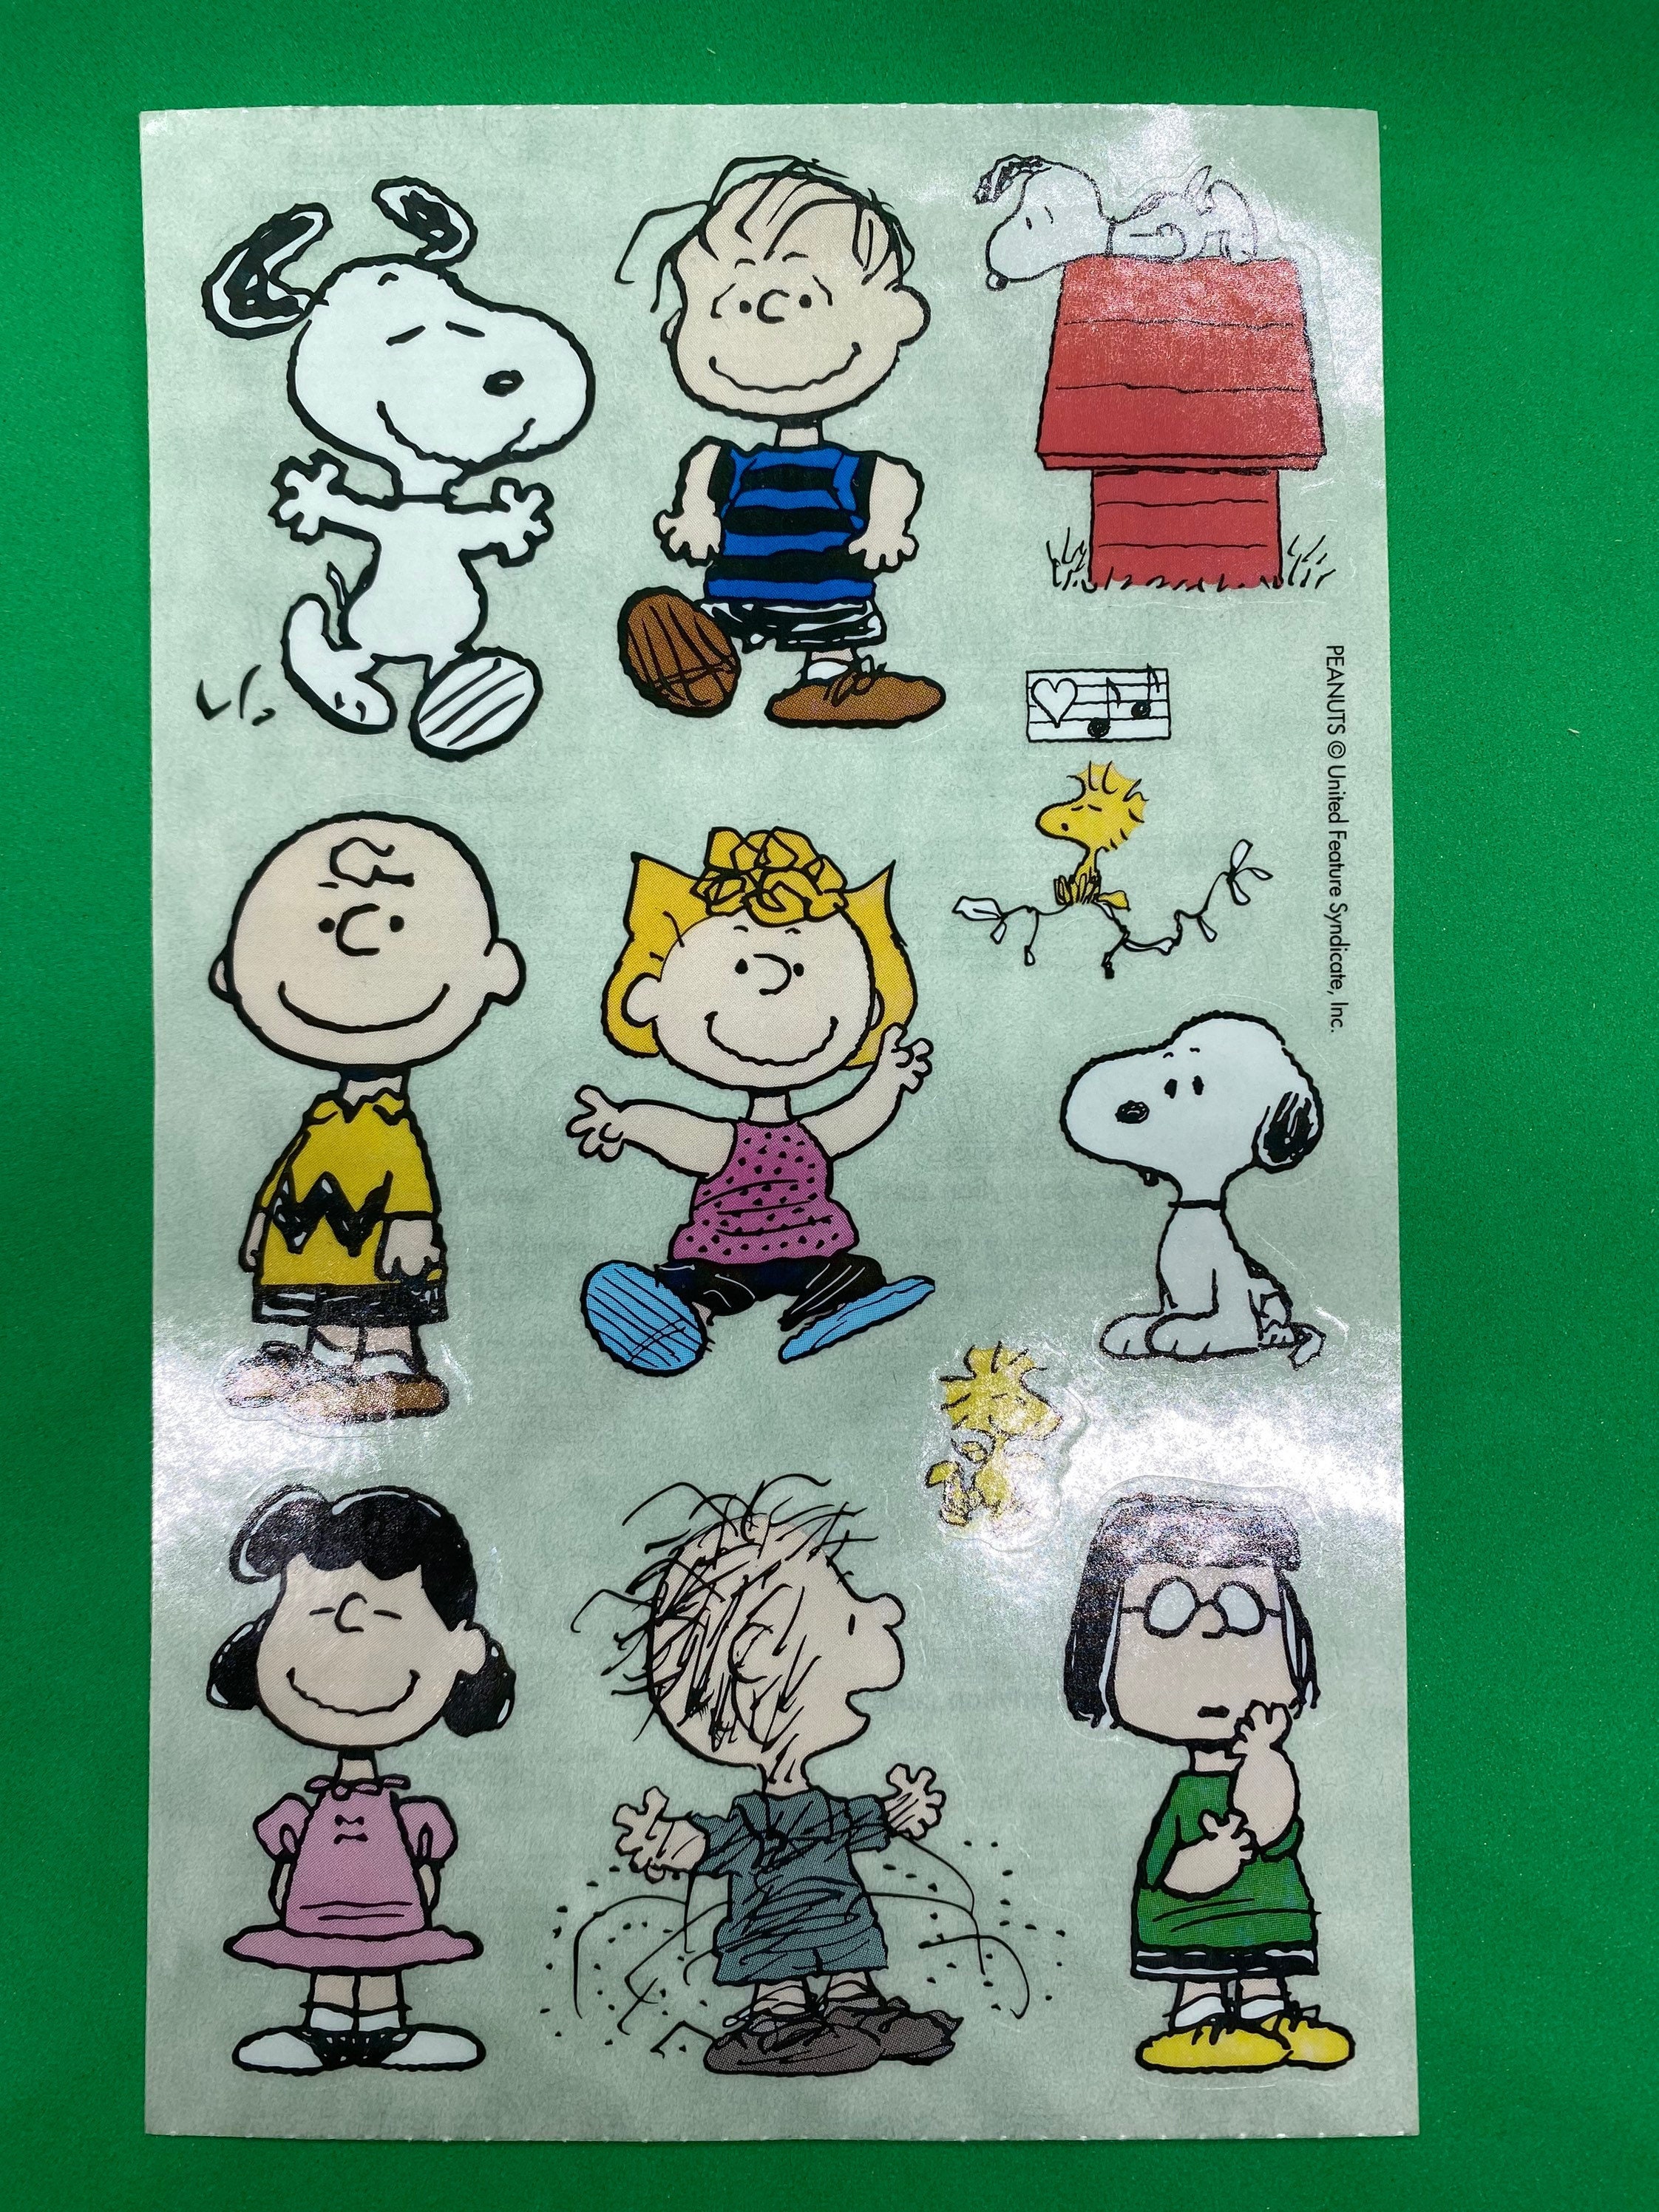 Charlie Brown Pens, Snoopy Stationery, Pu Stationery Set, Pu Student Pen